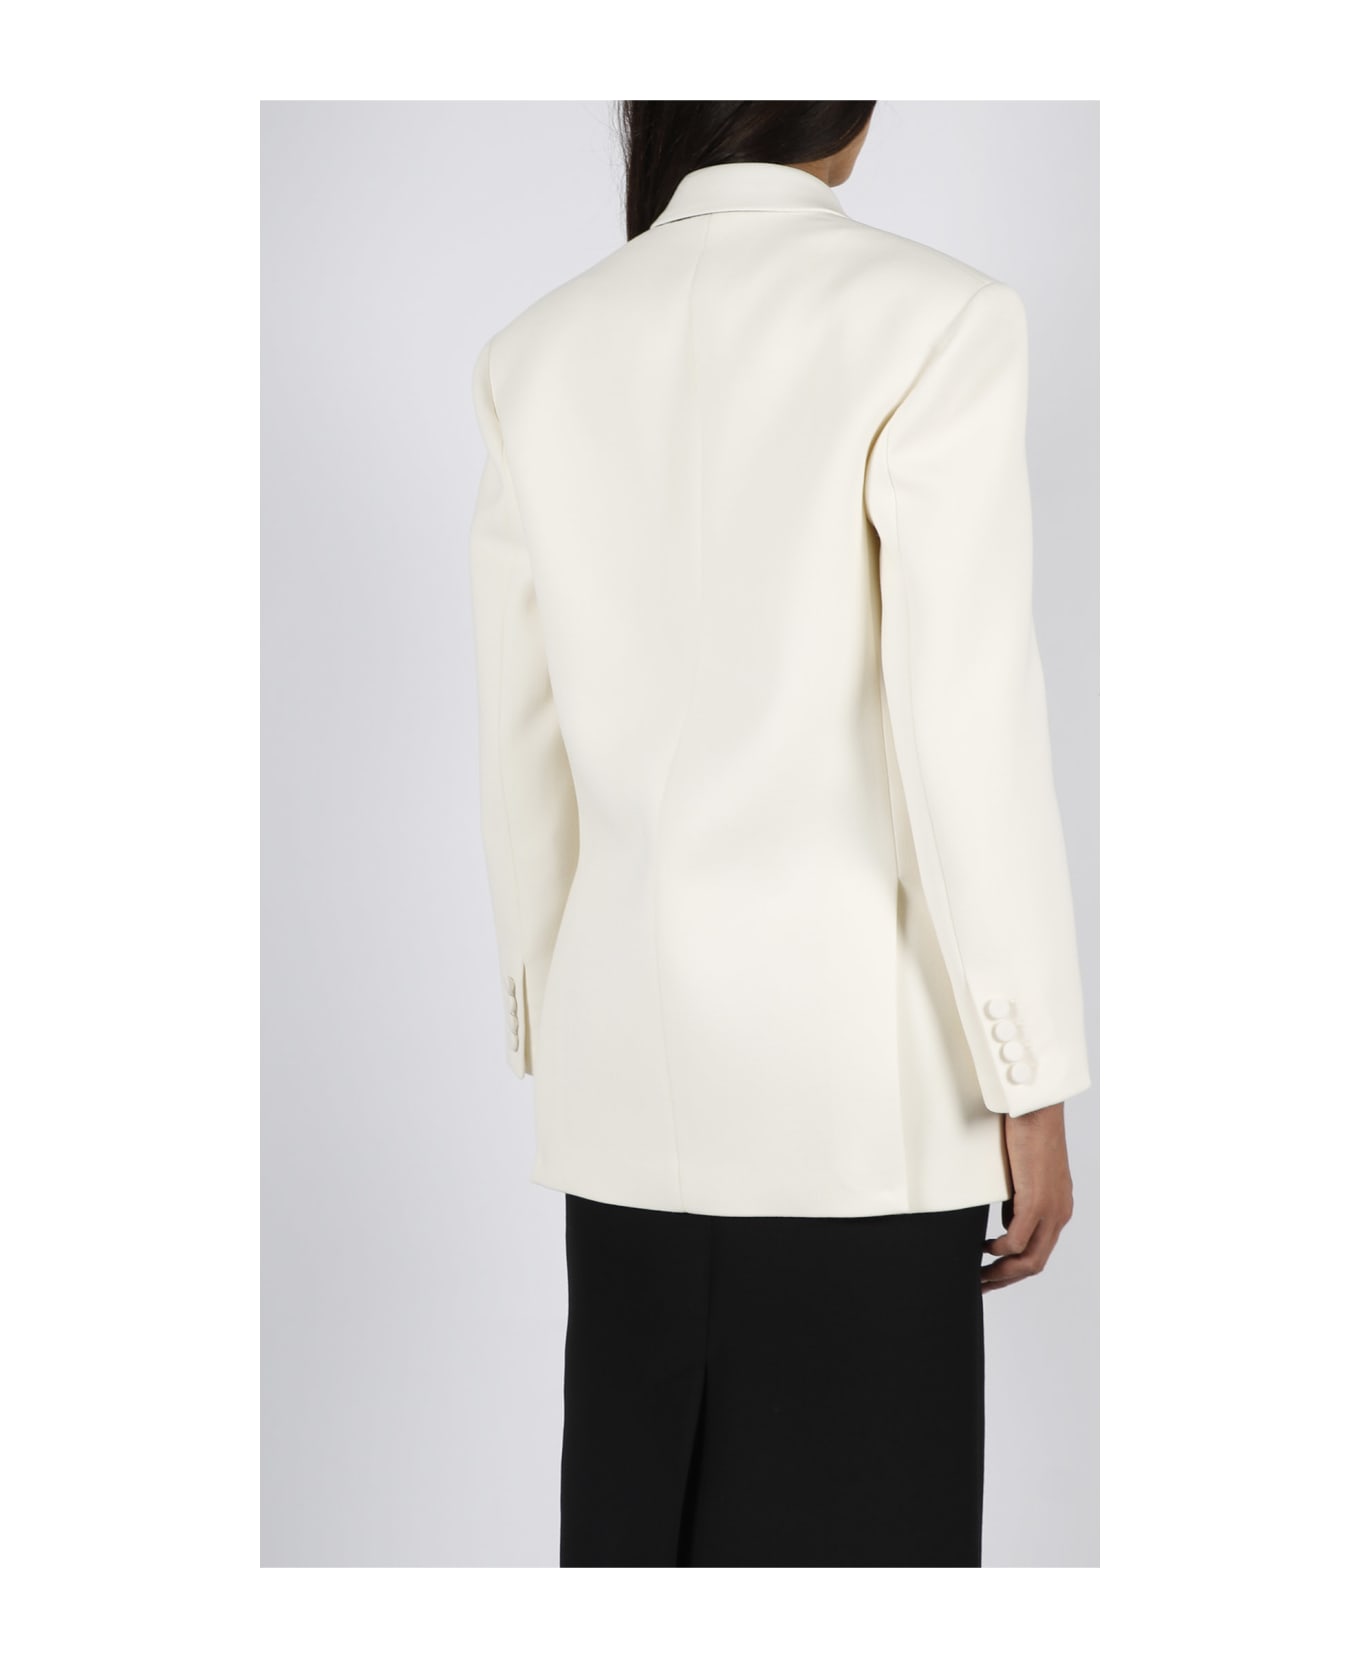 Valentino Garavani Suit Jacket In Virgin Wool - White